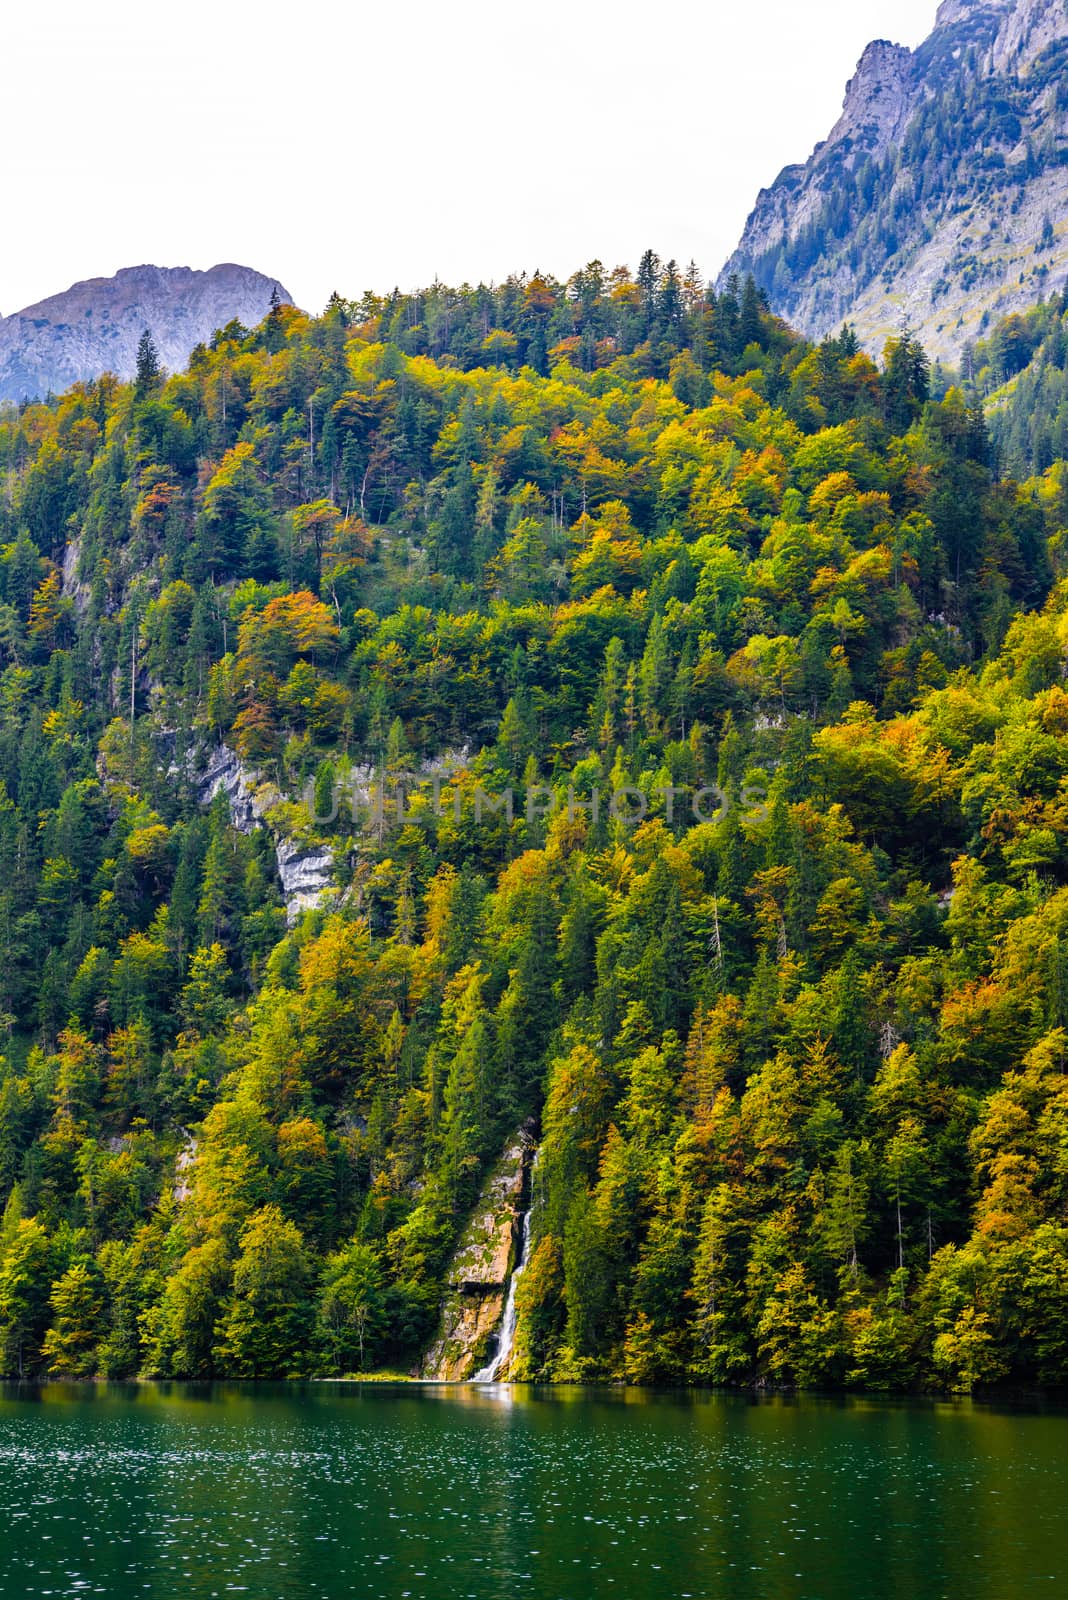 Small waterfall in Alp mountains near lake Koenigssee, Konigsee, Berchtesgaden National Park, Bavaria, Germany.